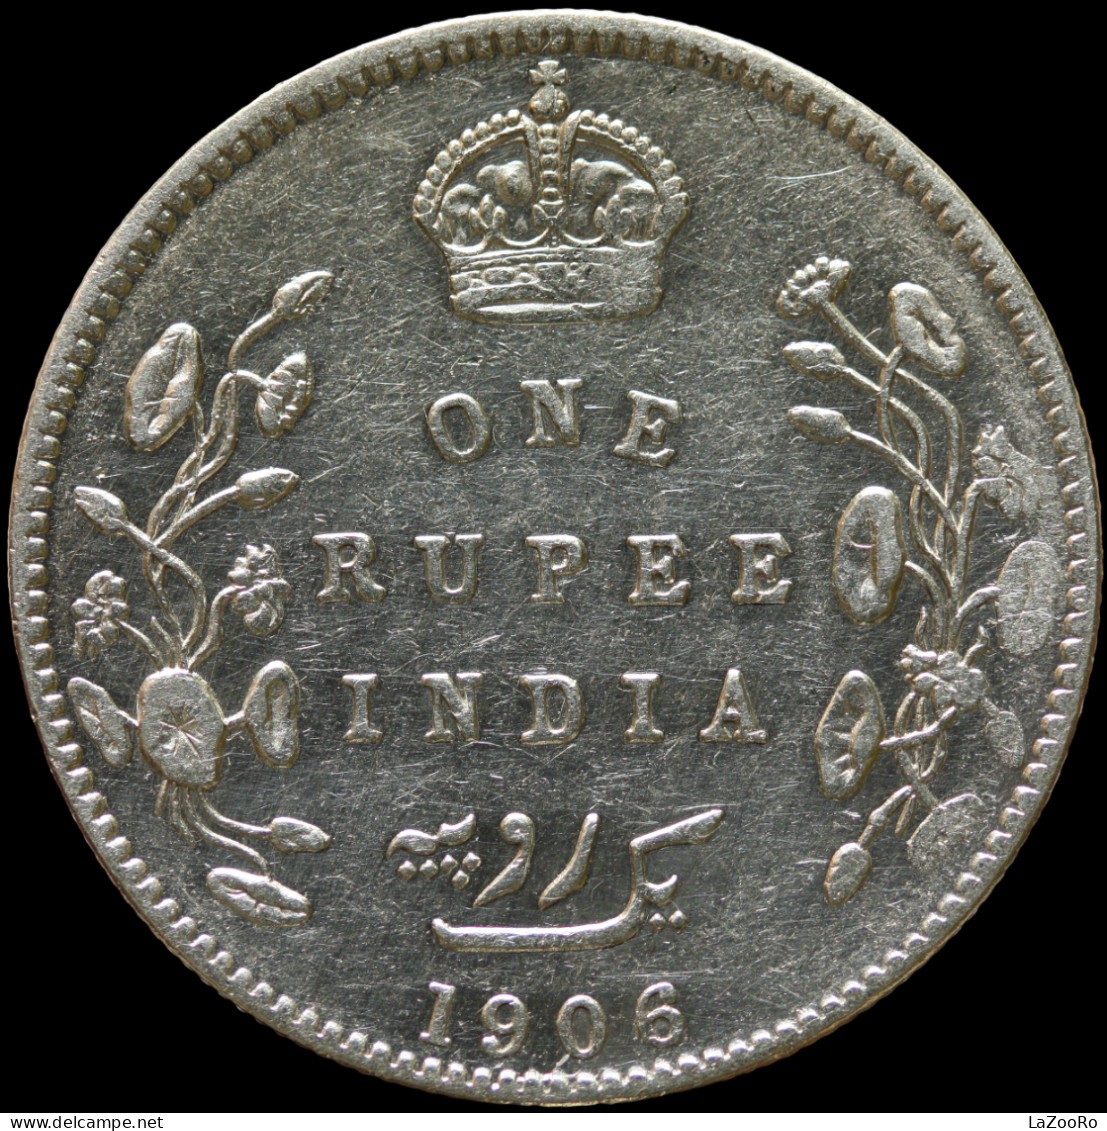 LaZooRo: British India 1 Rupee 1906 XF - Silver - Kolonies